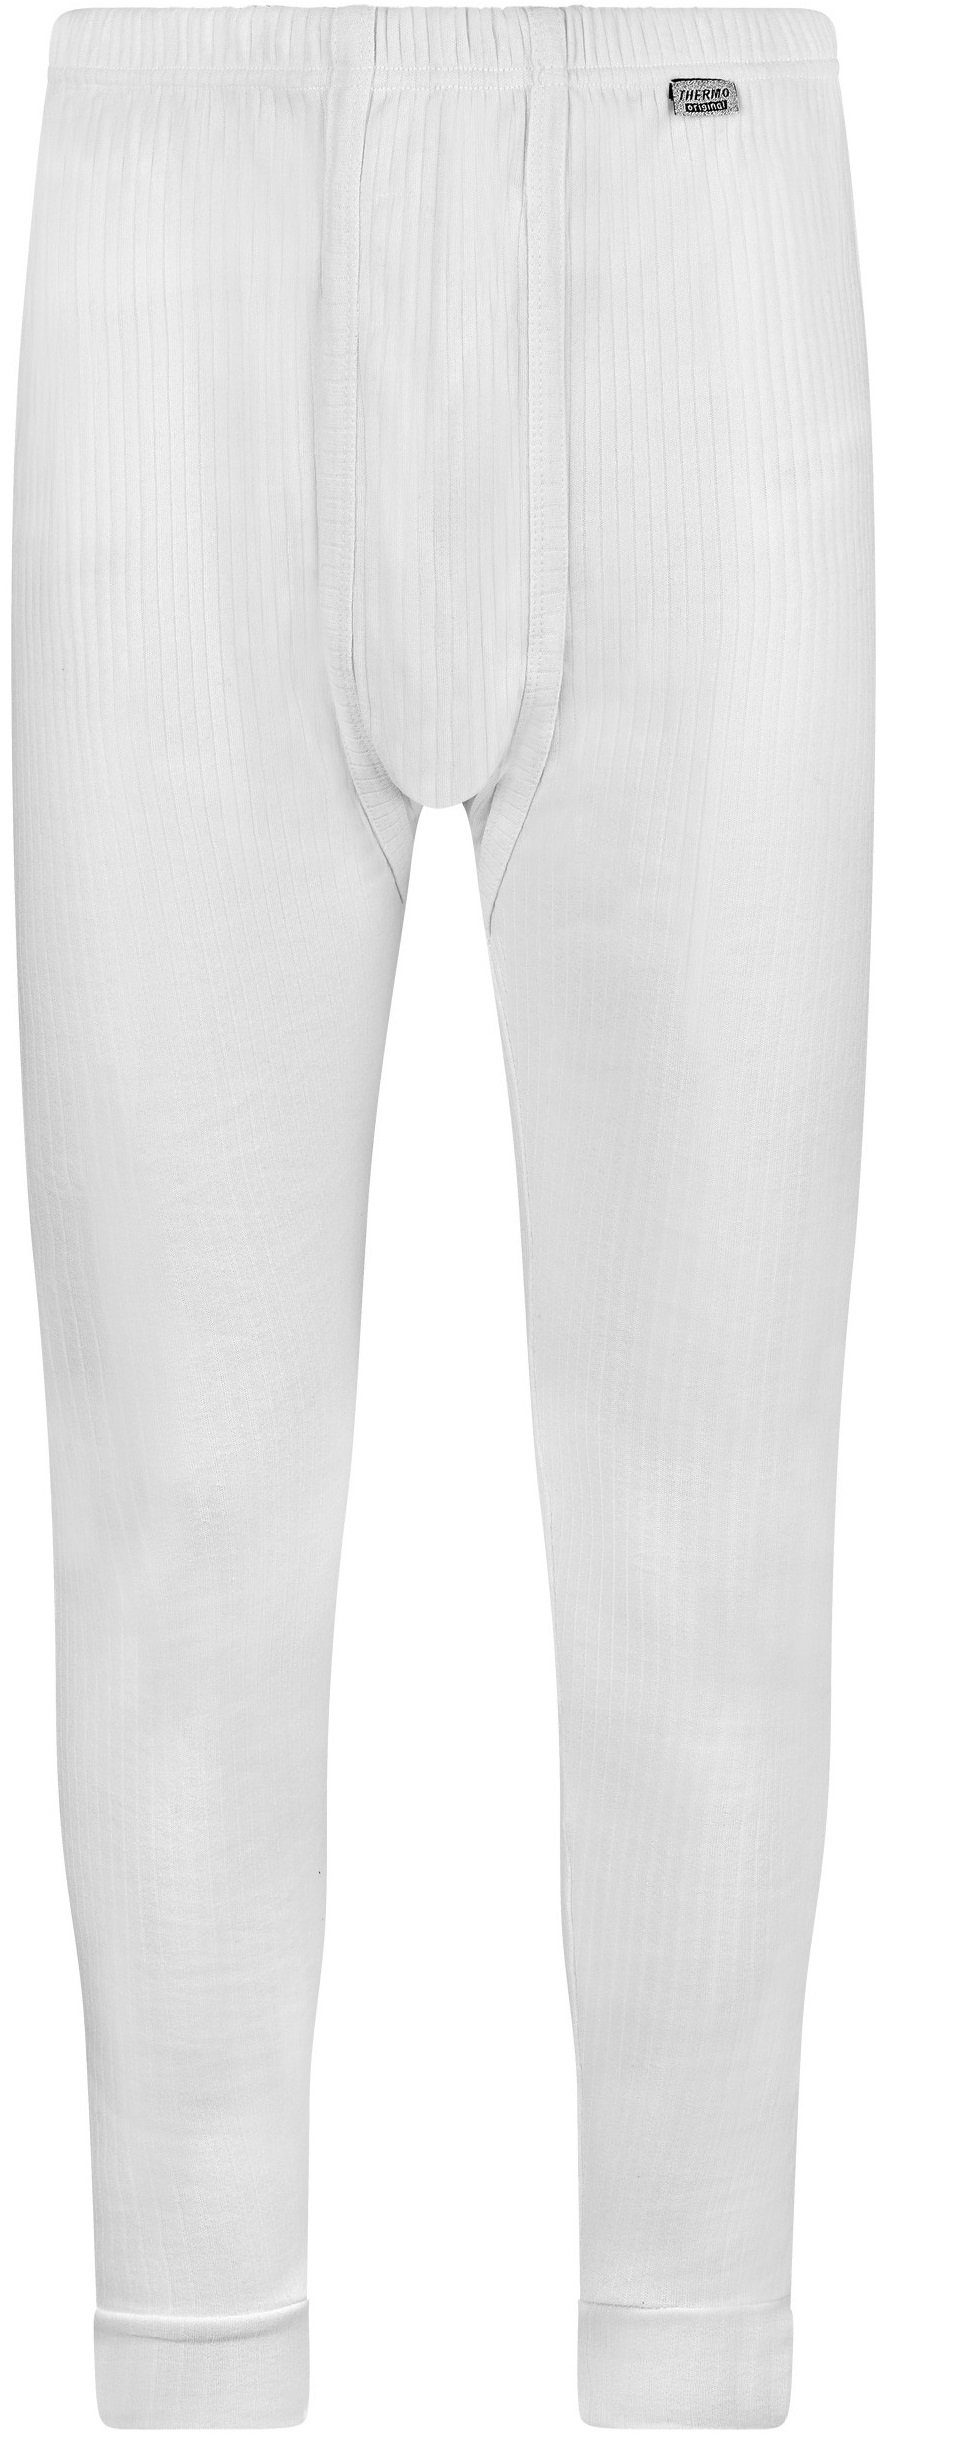 cwonlineshop Lange Unterhose Thermounterhose Herren Legging Lang Weiß 2 Stück (A-6015)